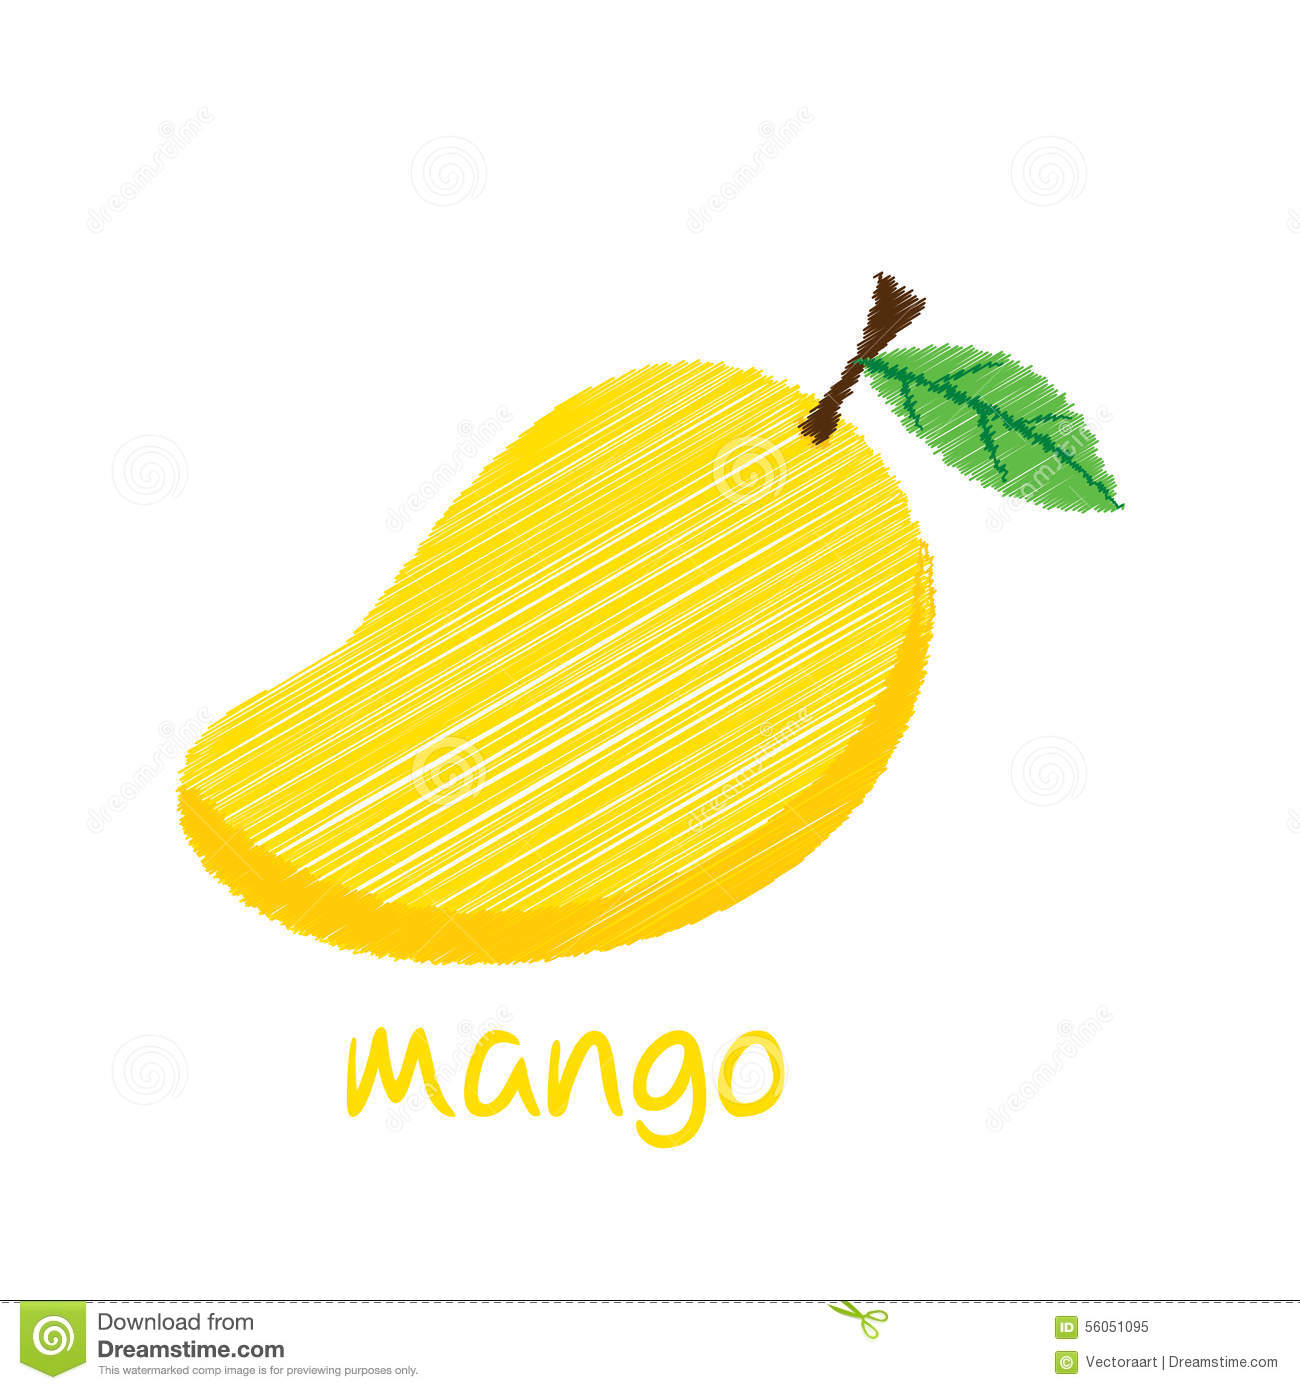 Mango clipart .